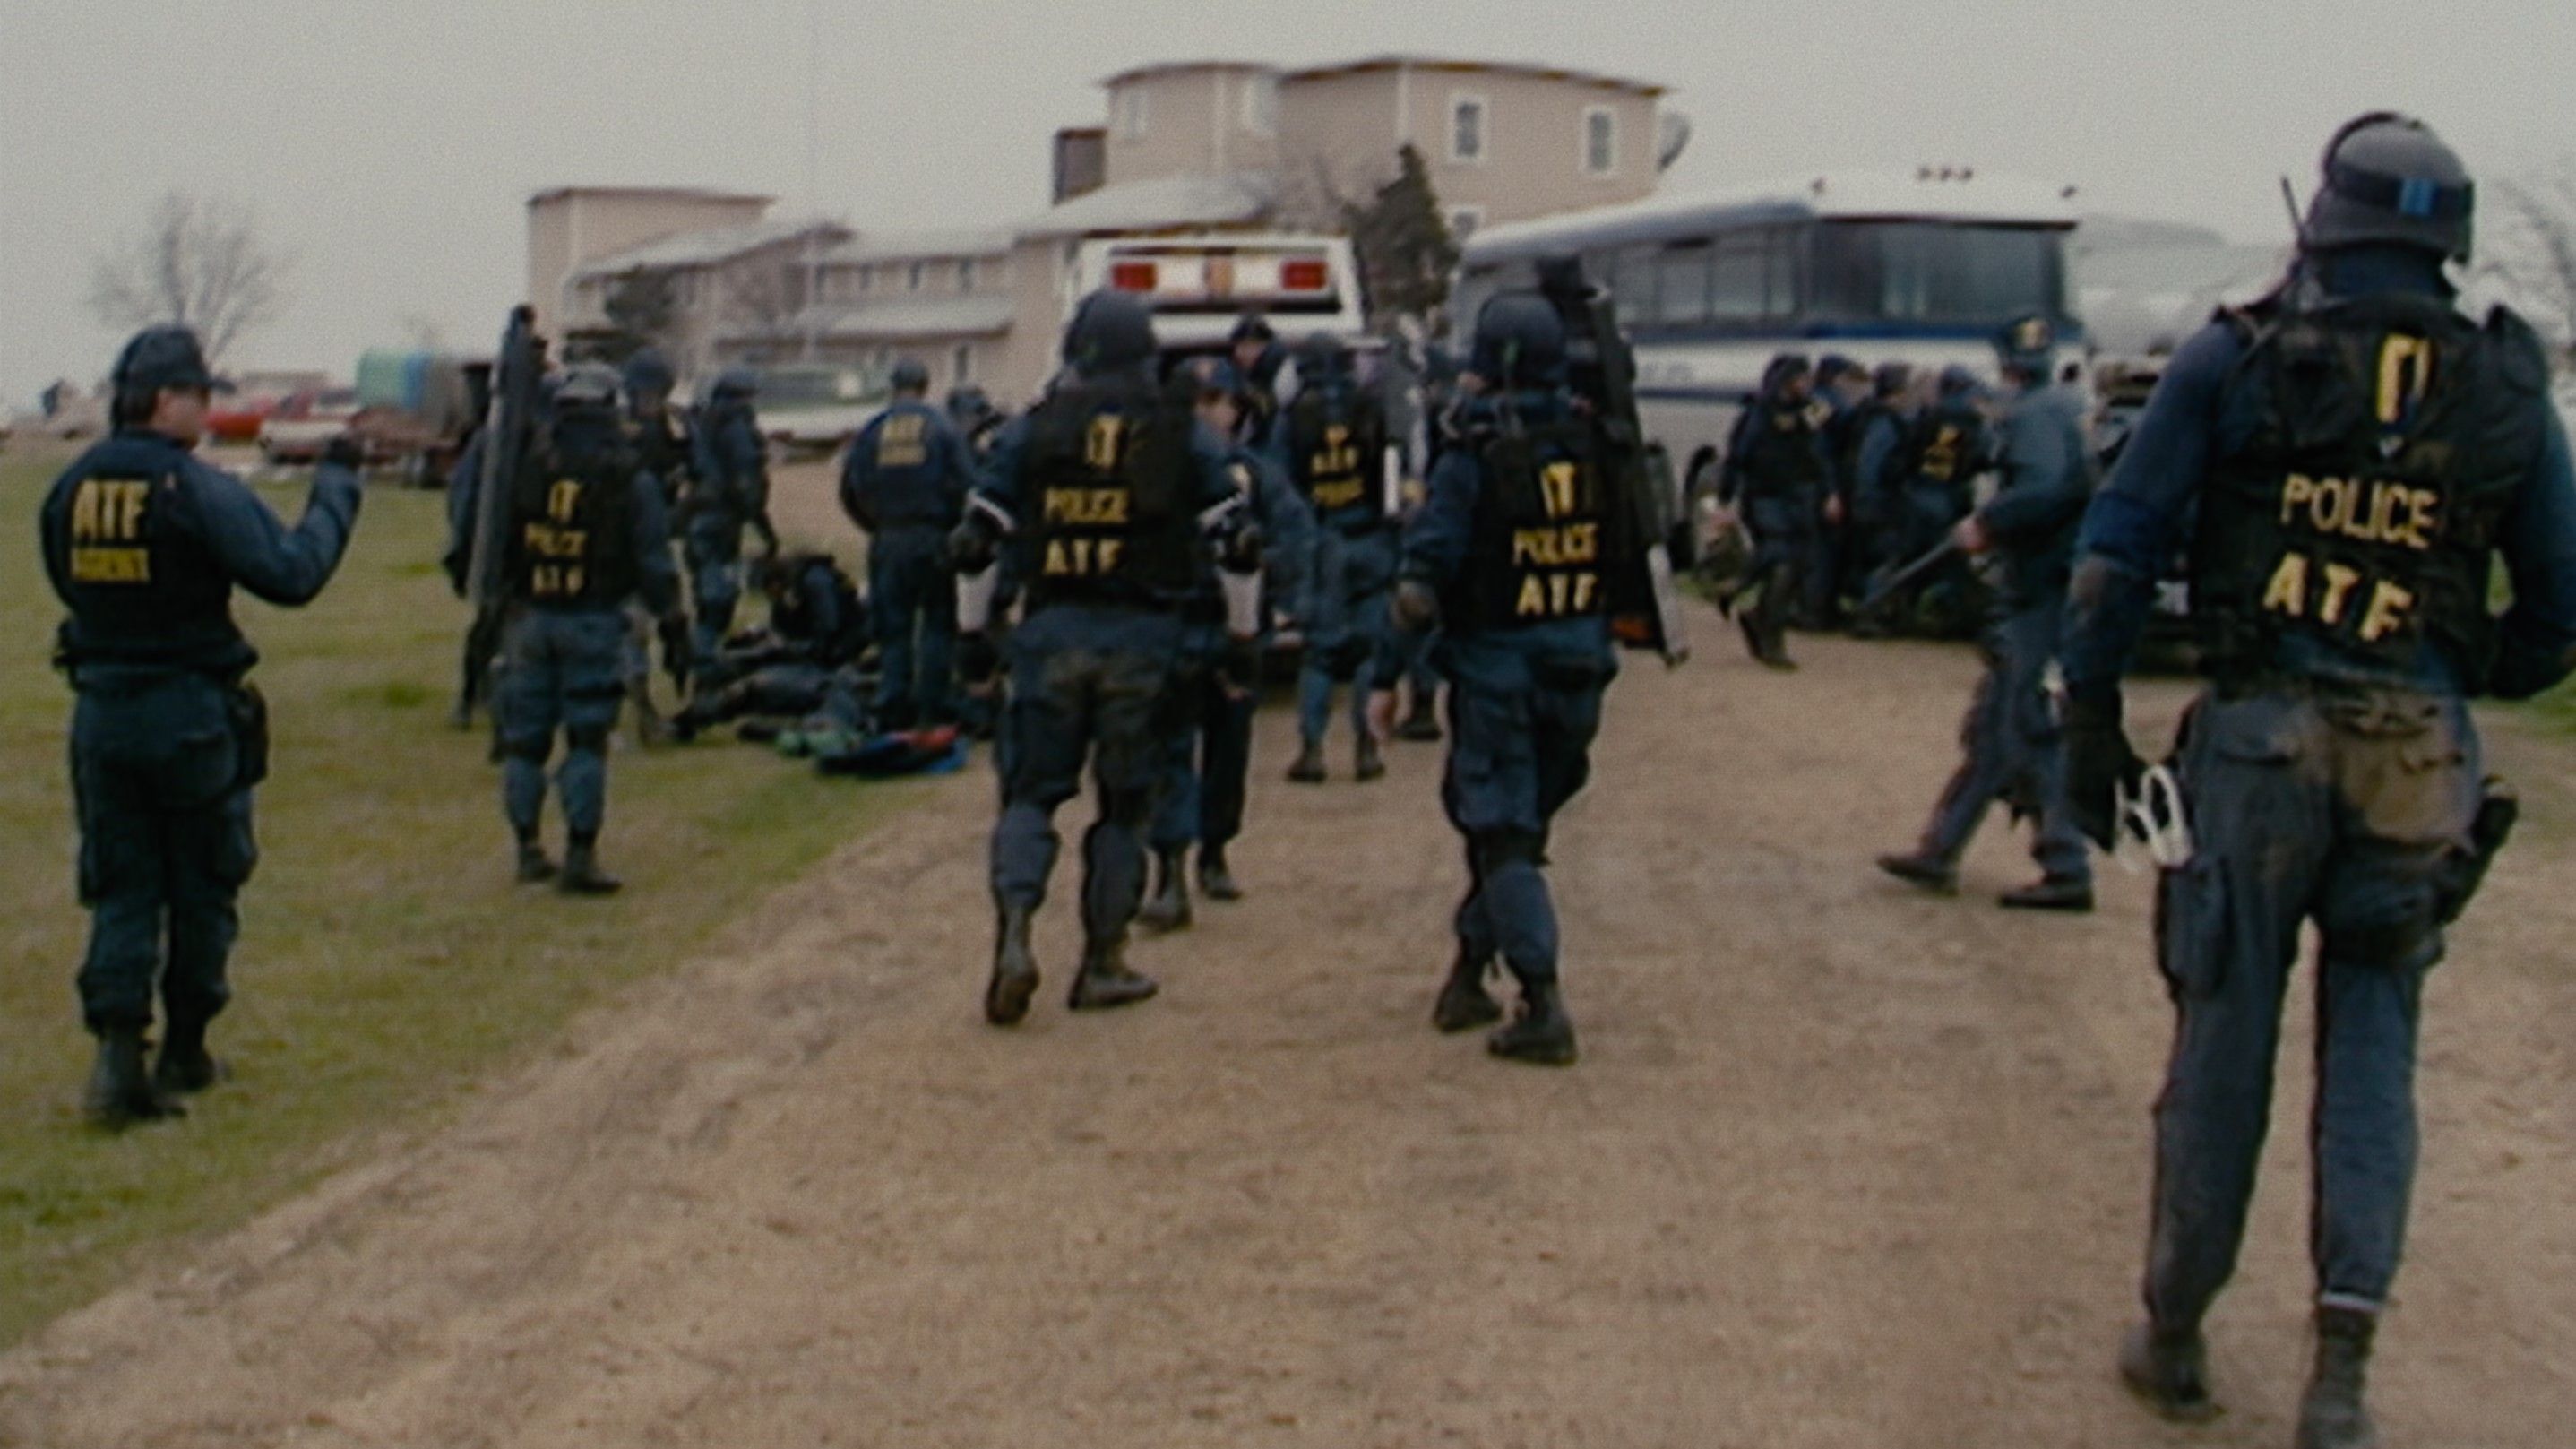 ATF agents raiding the Branch Davidian compound in Waco: American Apocalypse. 